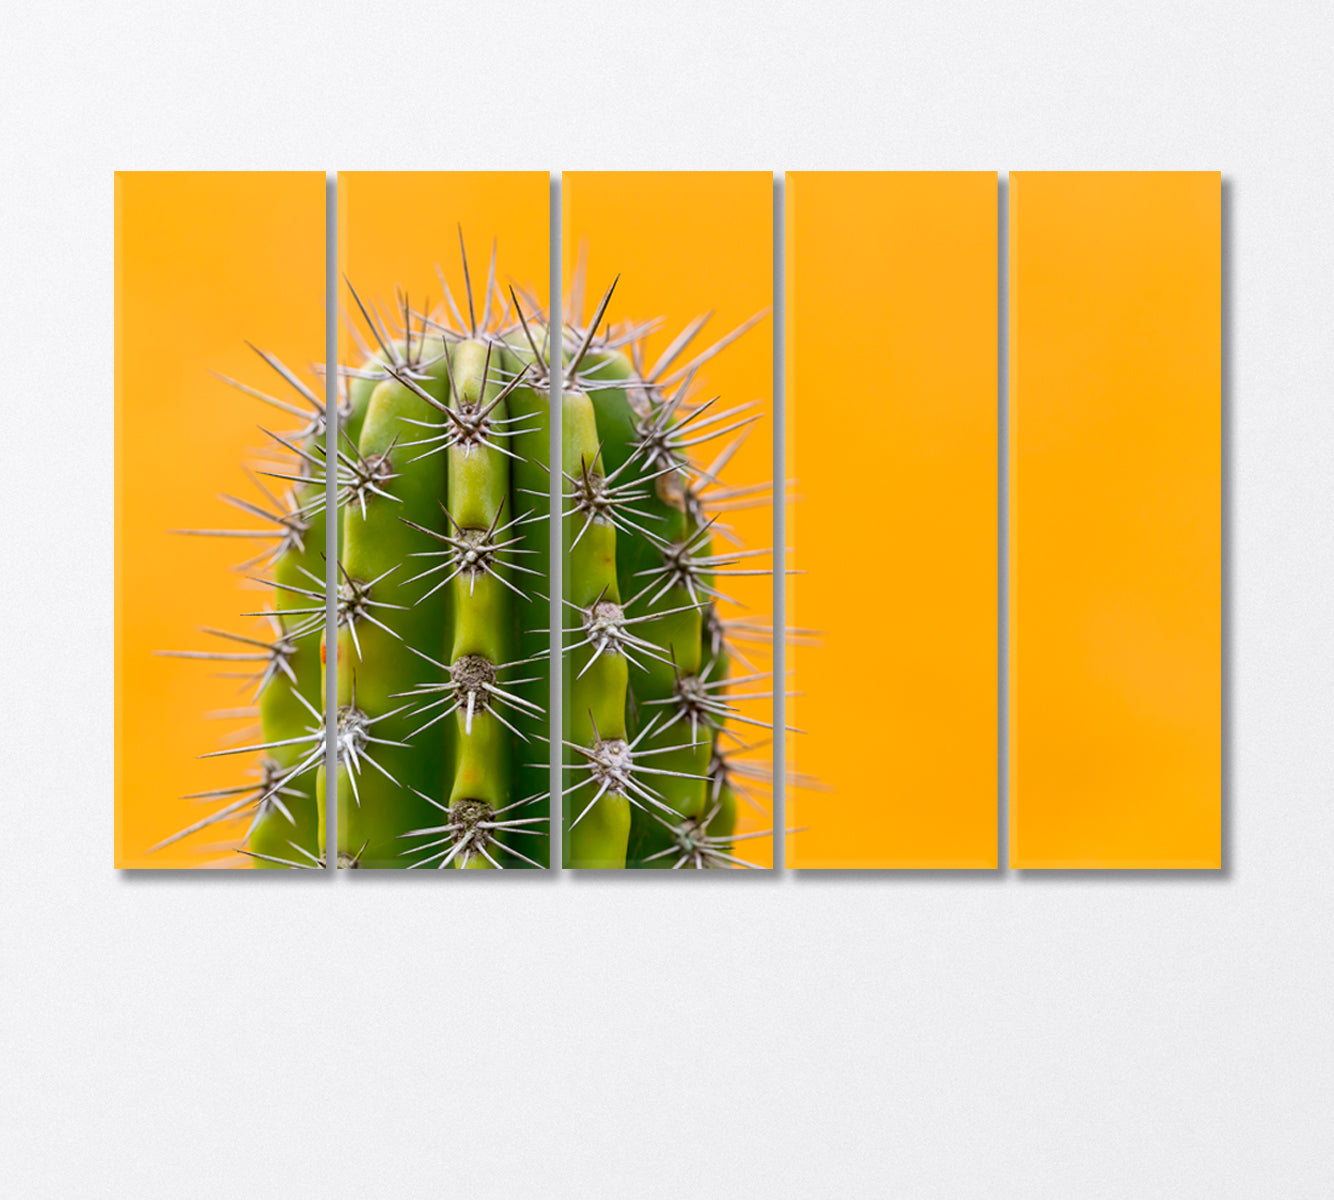 Cactus With Sharp Thorns Canvas Print-Canvas Print-CetArt-5 Panels-36x24 inches-CetArt